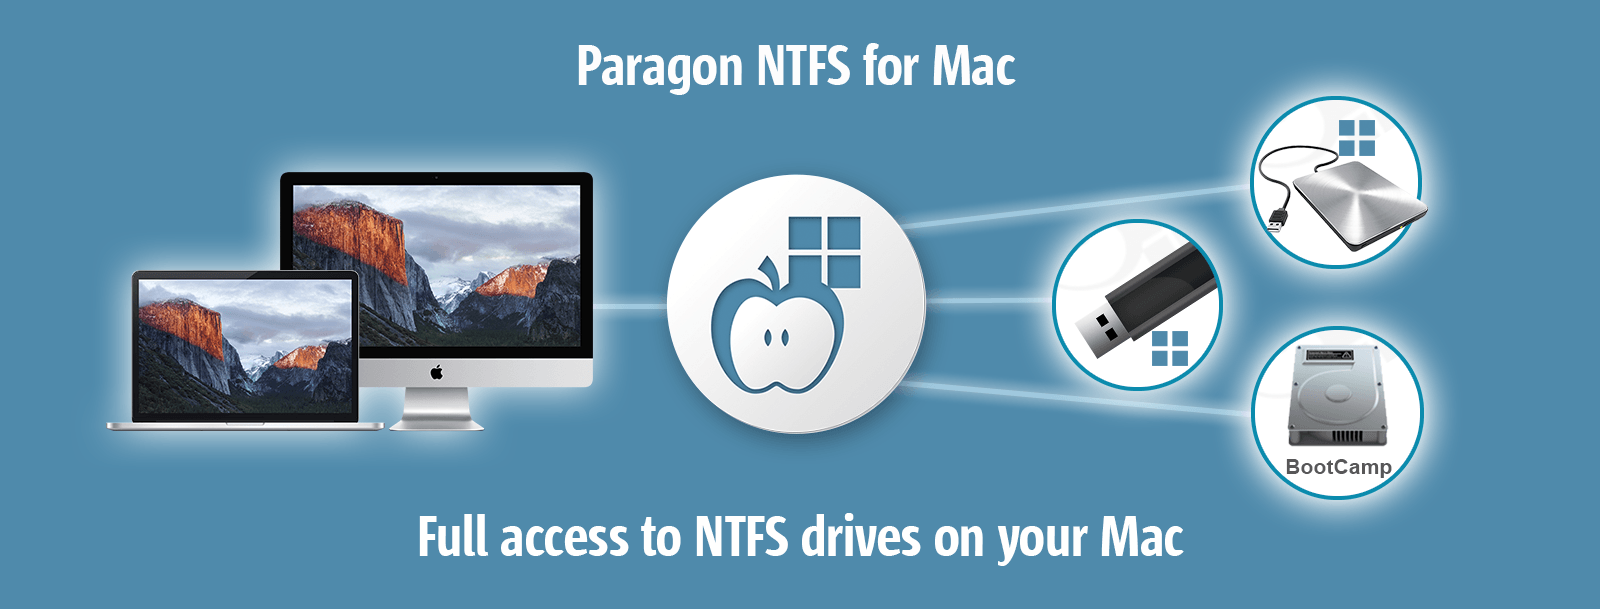 paragon ntfs for mac use